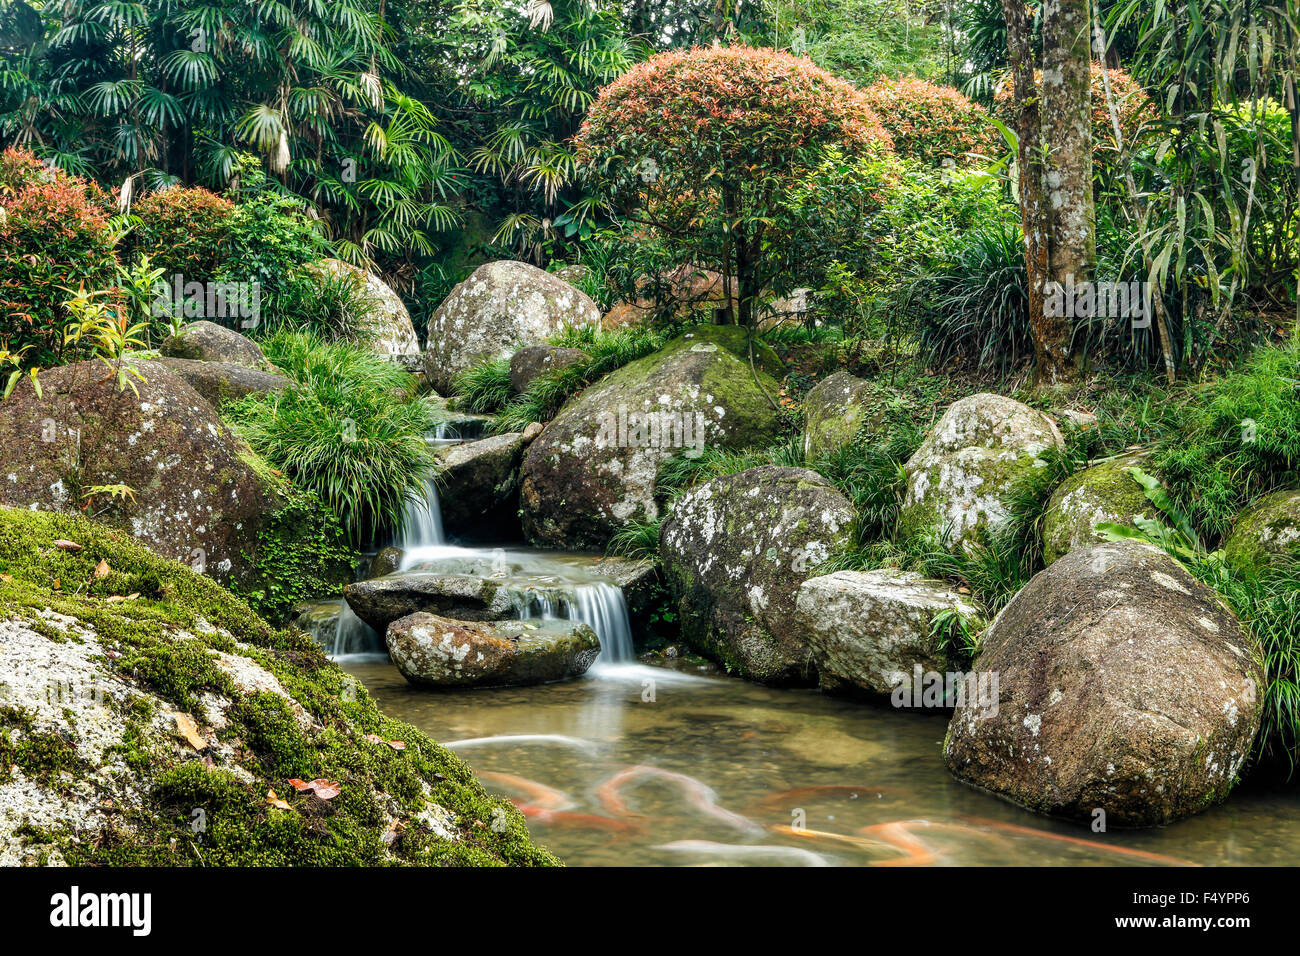 The Japanese Gardens of Bukit Tinggi, Pahang, Malaysia. Stock Photo